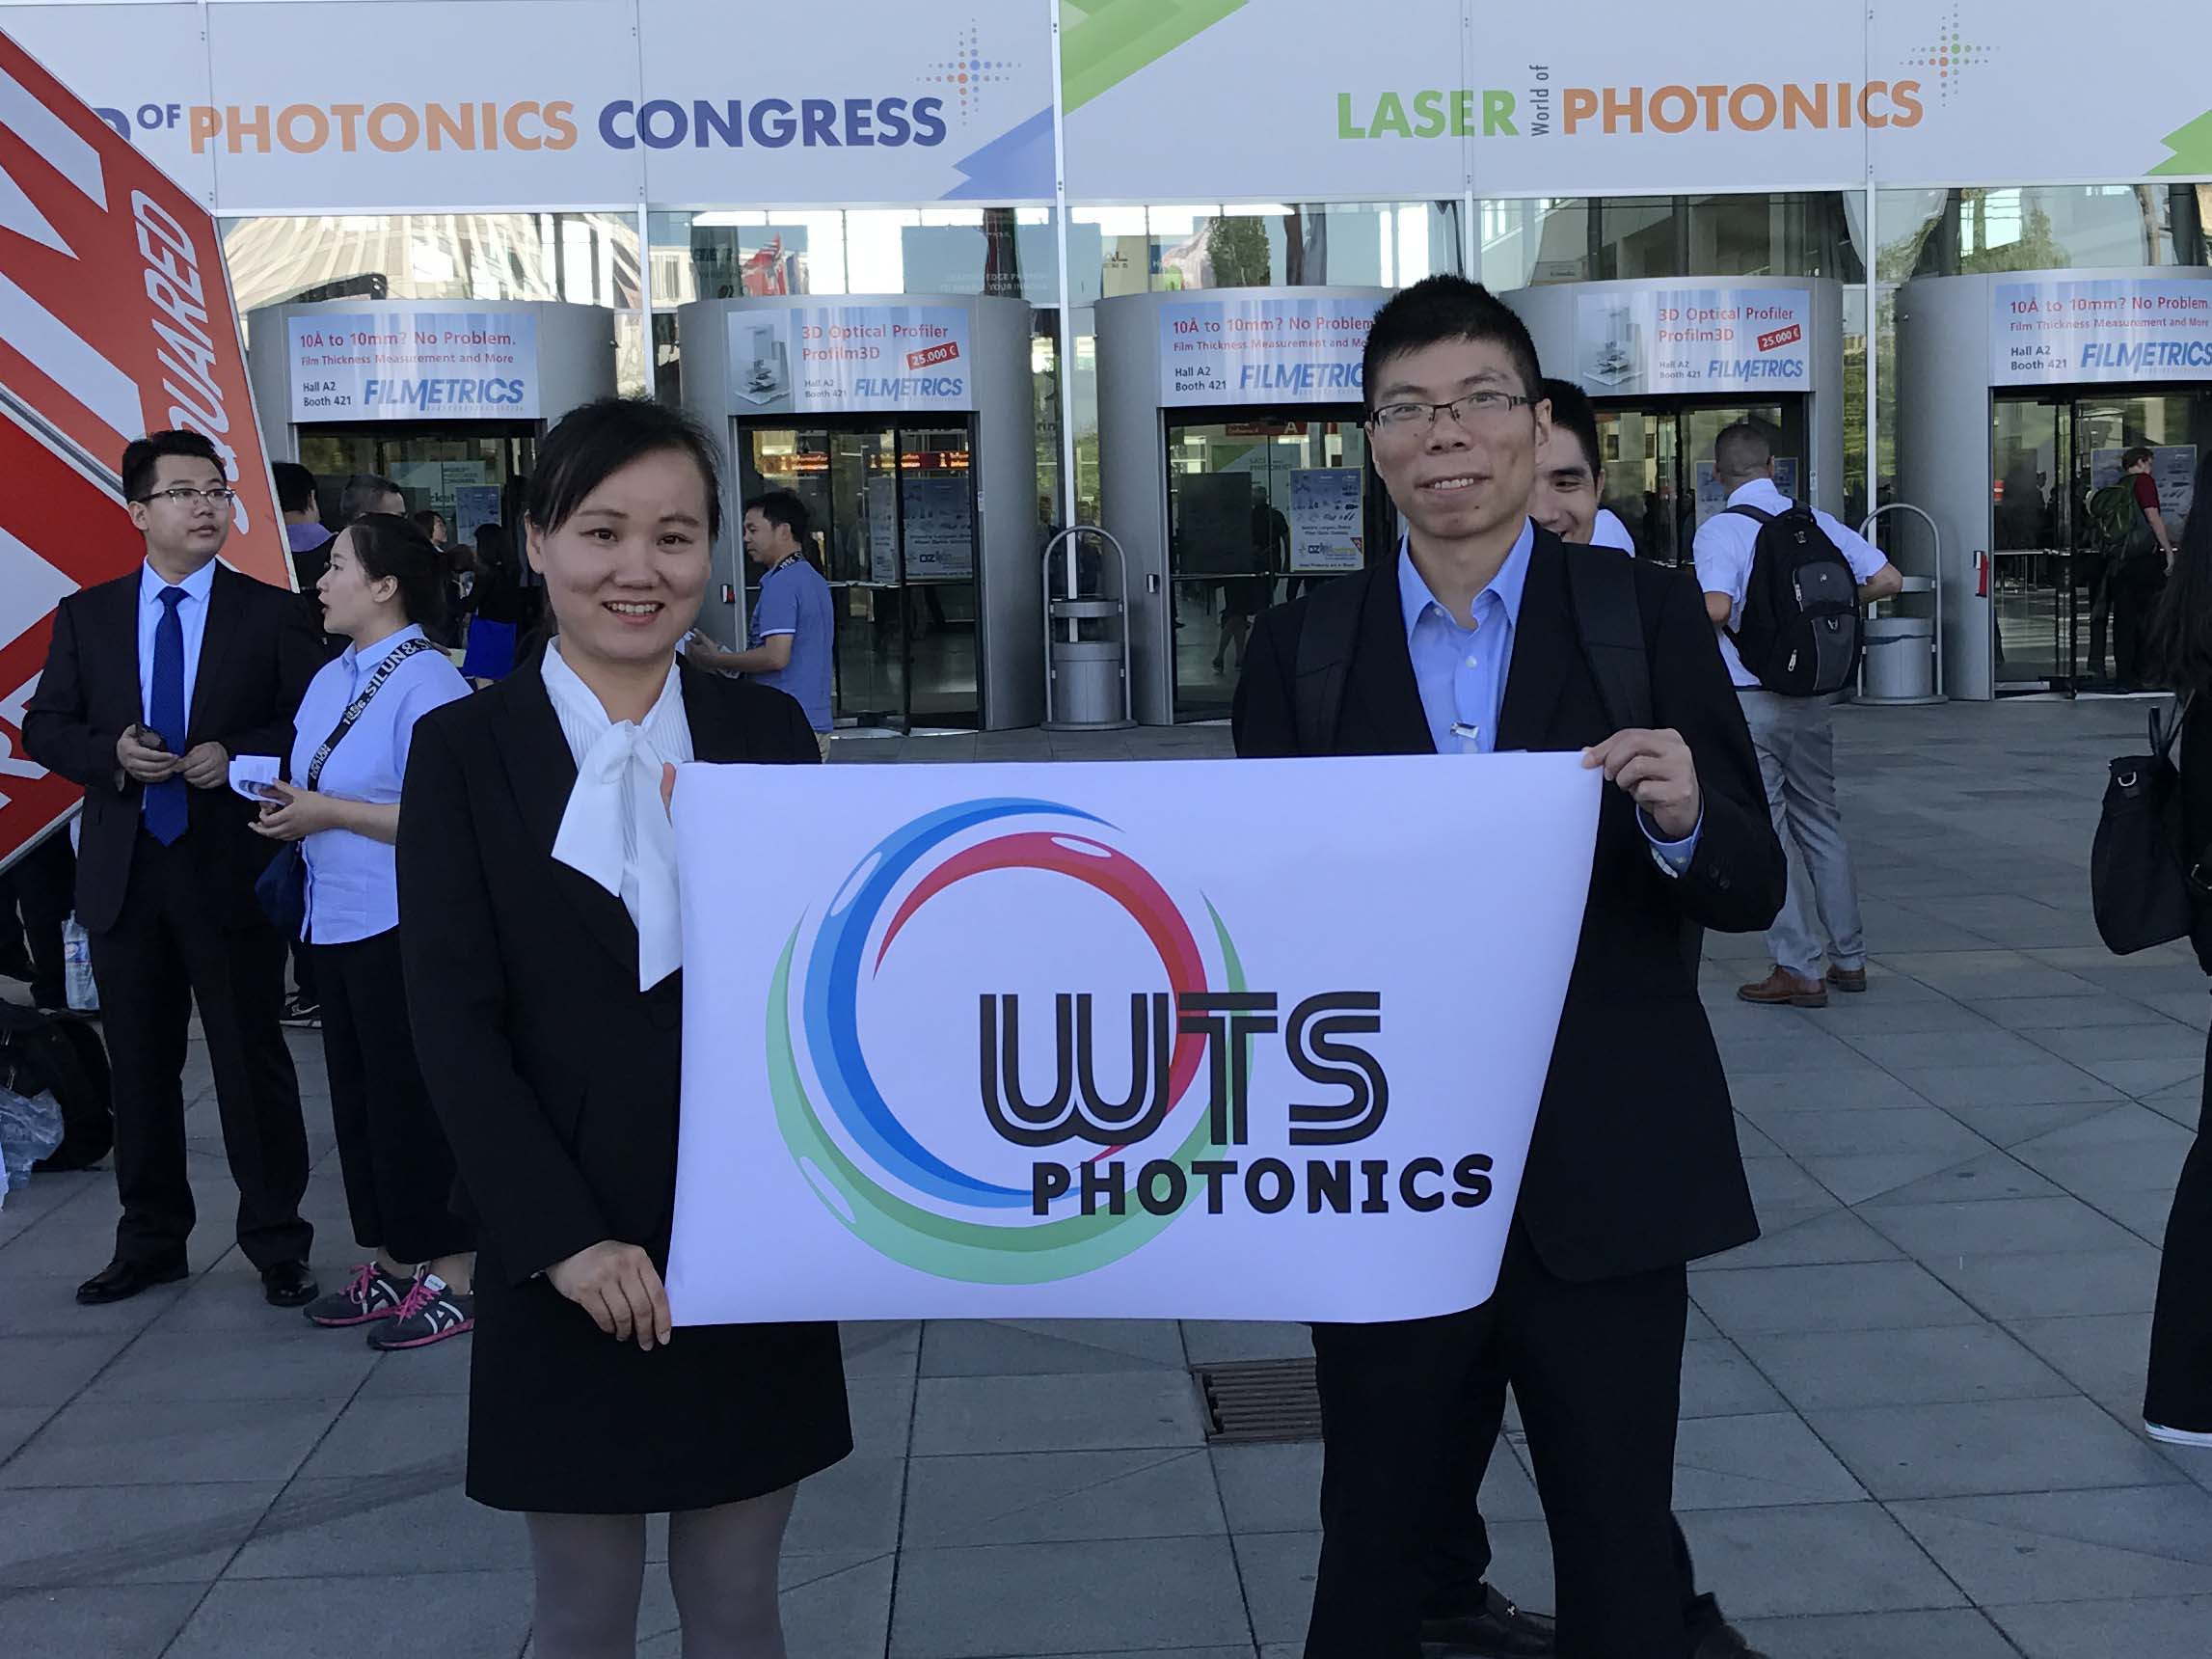 wts photonics ha participado con éxito en el mundo del láser de fotónica 2017